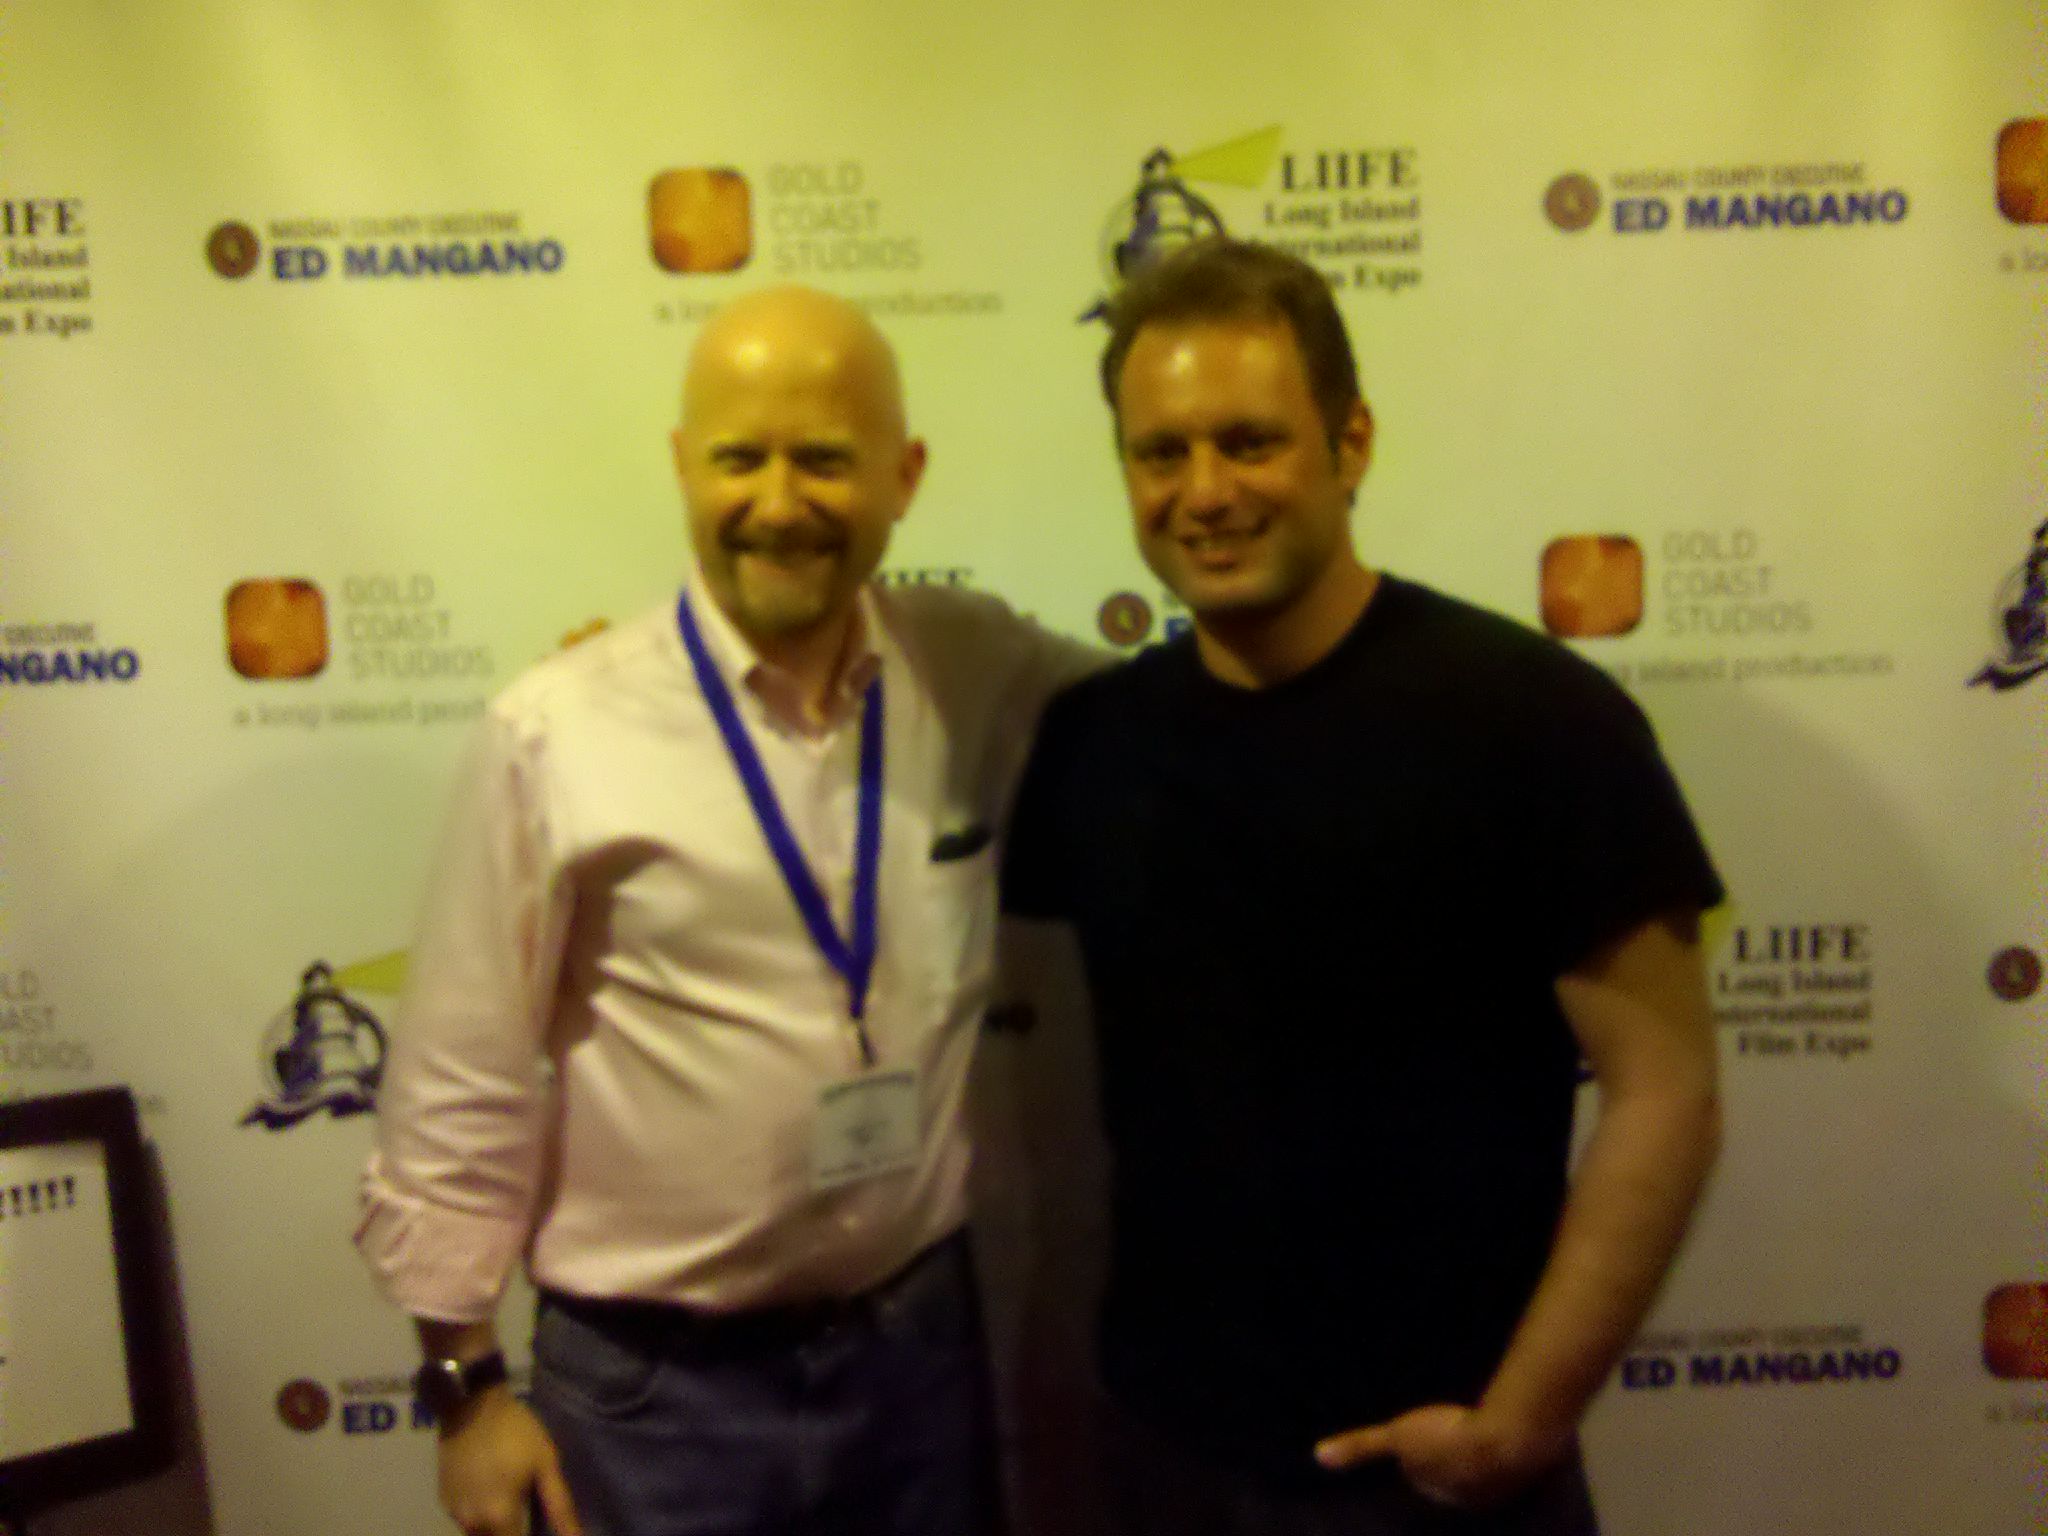 Jim Cook (filmmaker & LIIFE board member) & Ed Bergtold (actor) 